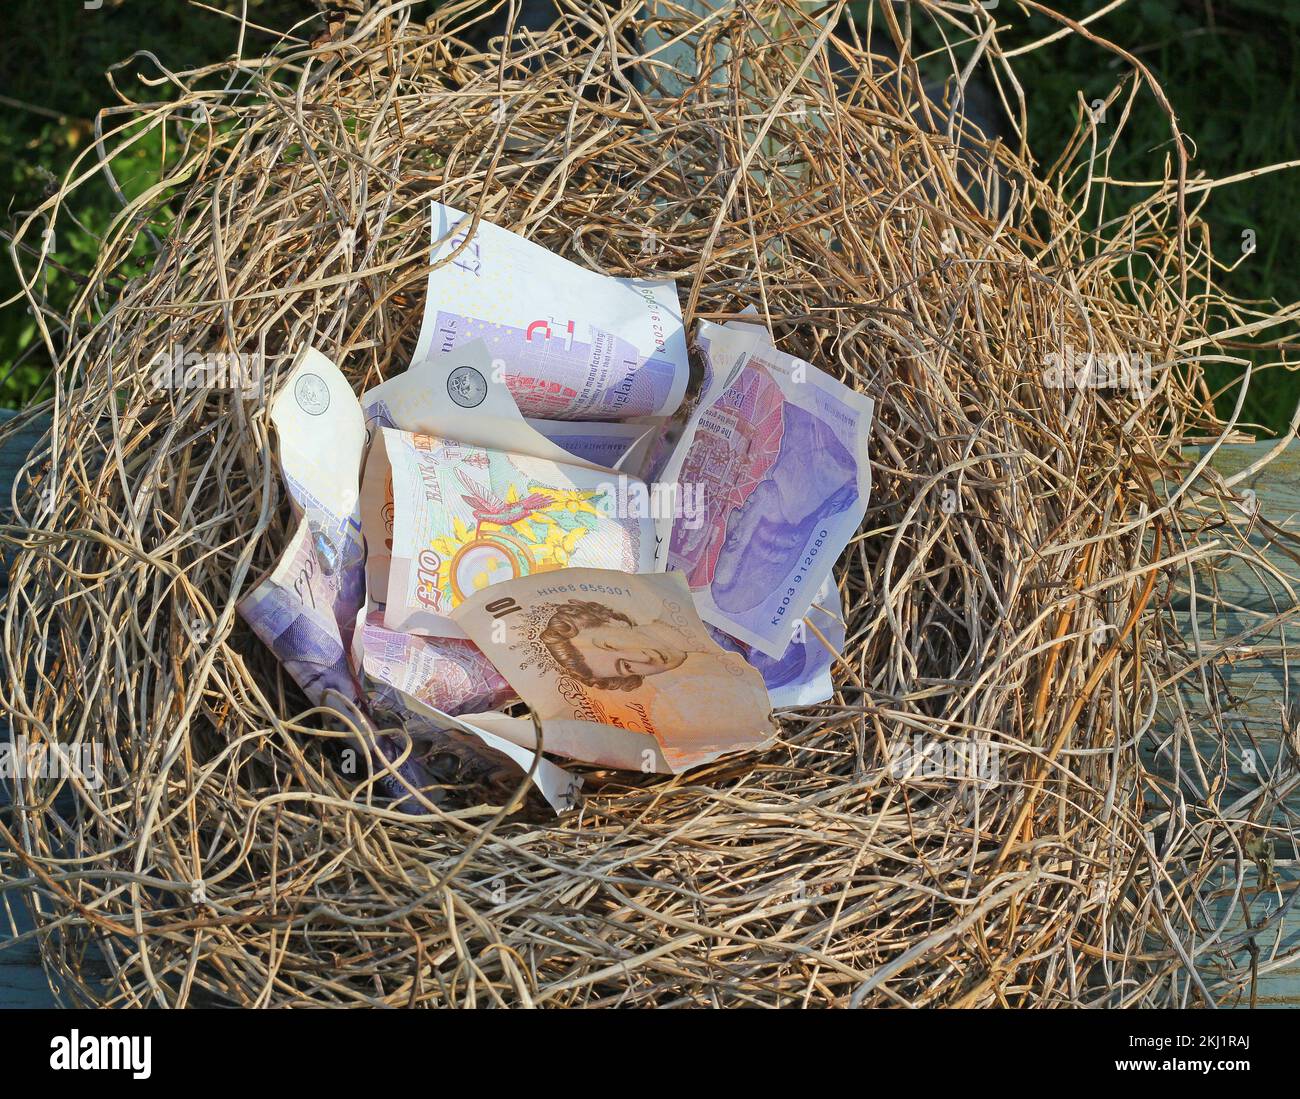 Nest egg. Money in a nest concept. Stock Photo